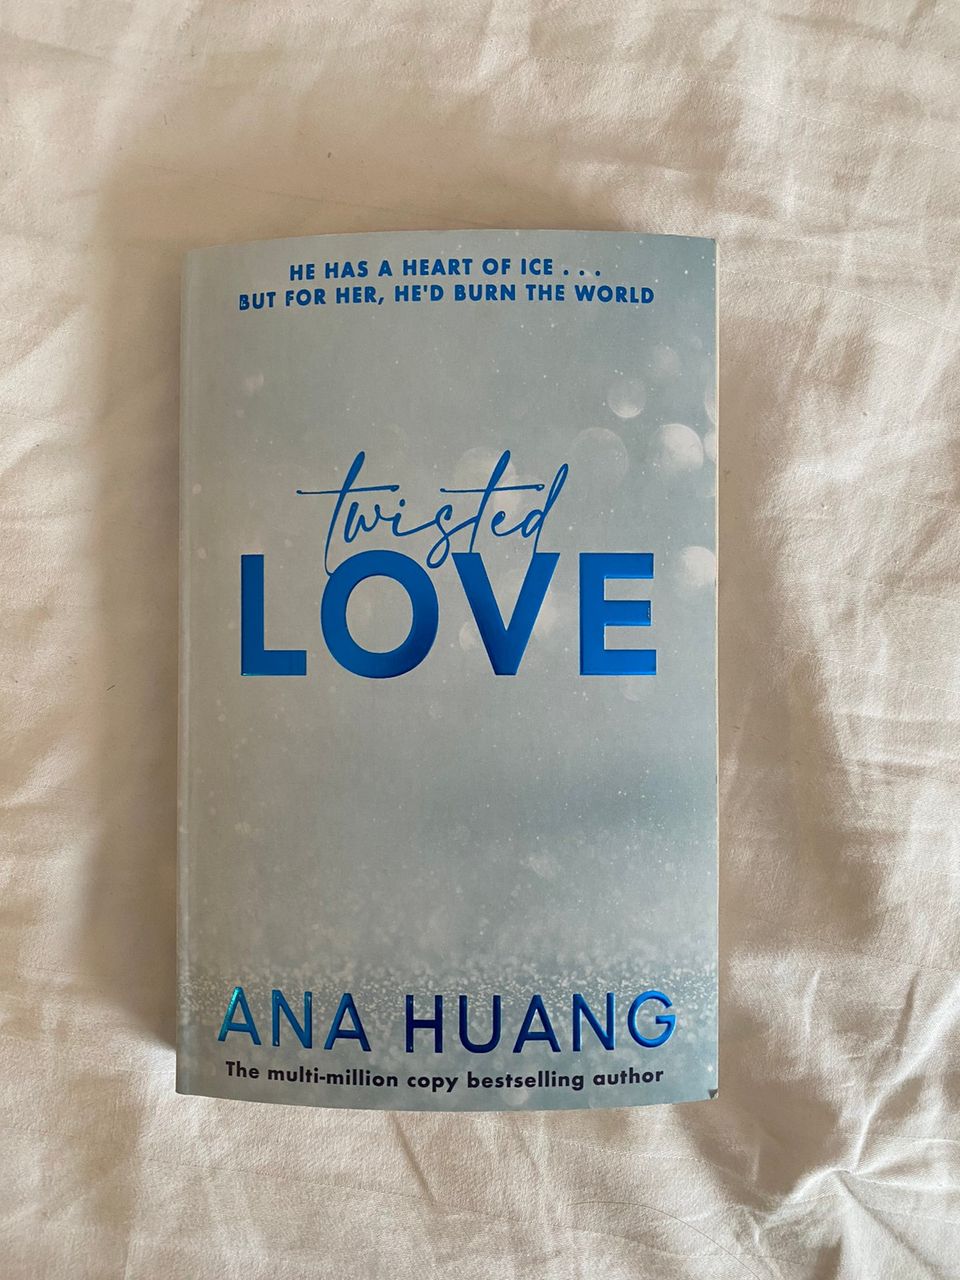 Twisted love - Ana huang